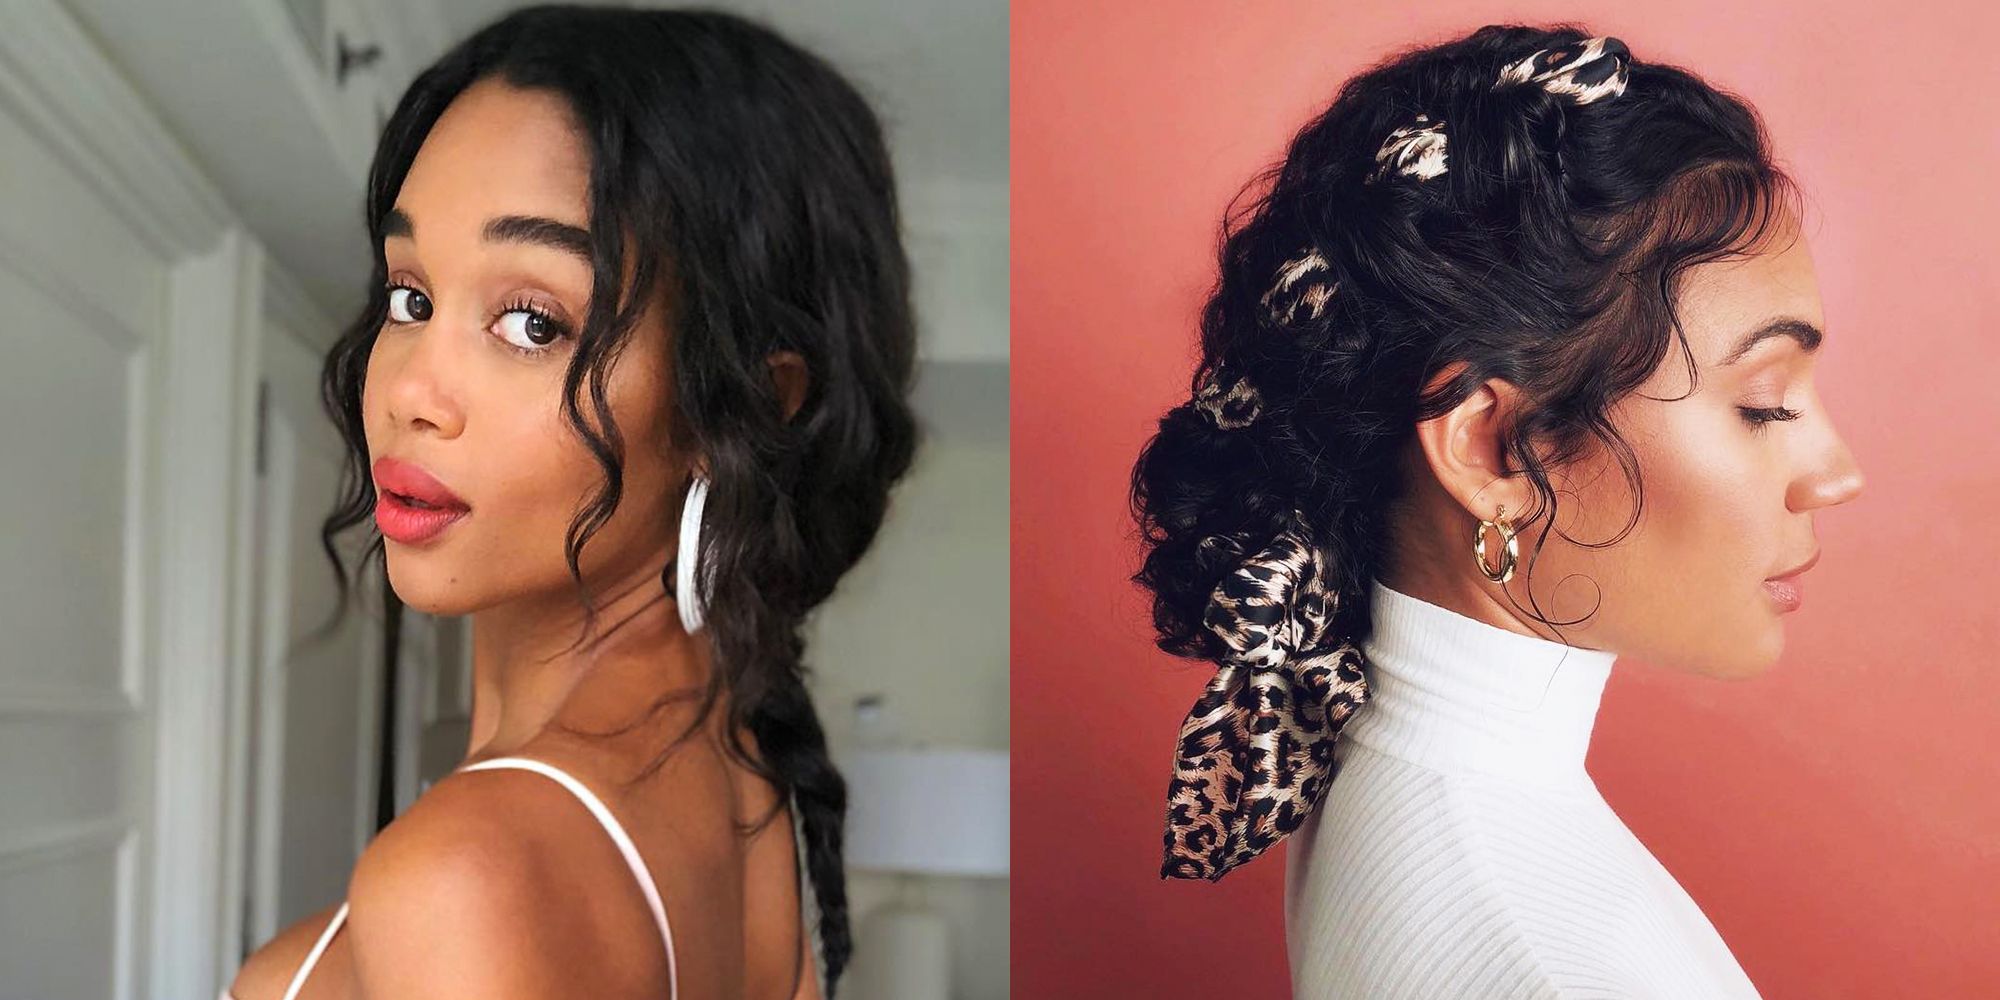 Amazon.com : Naseily Short Wavy Bob Hairstyles for Black Women Ombre  Burgundy Hair Wig Bob Hair Wigs for Women : Beauty & Personal Care